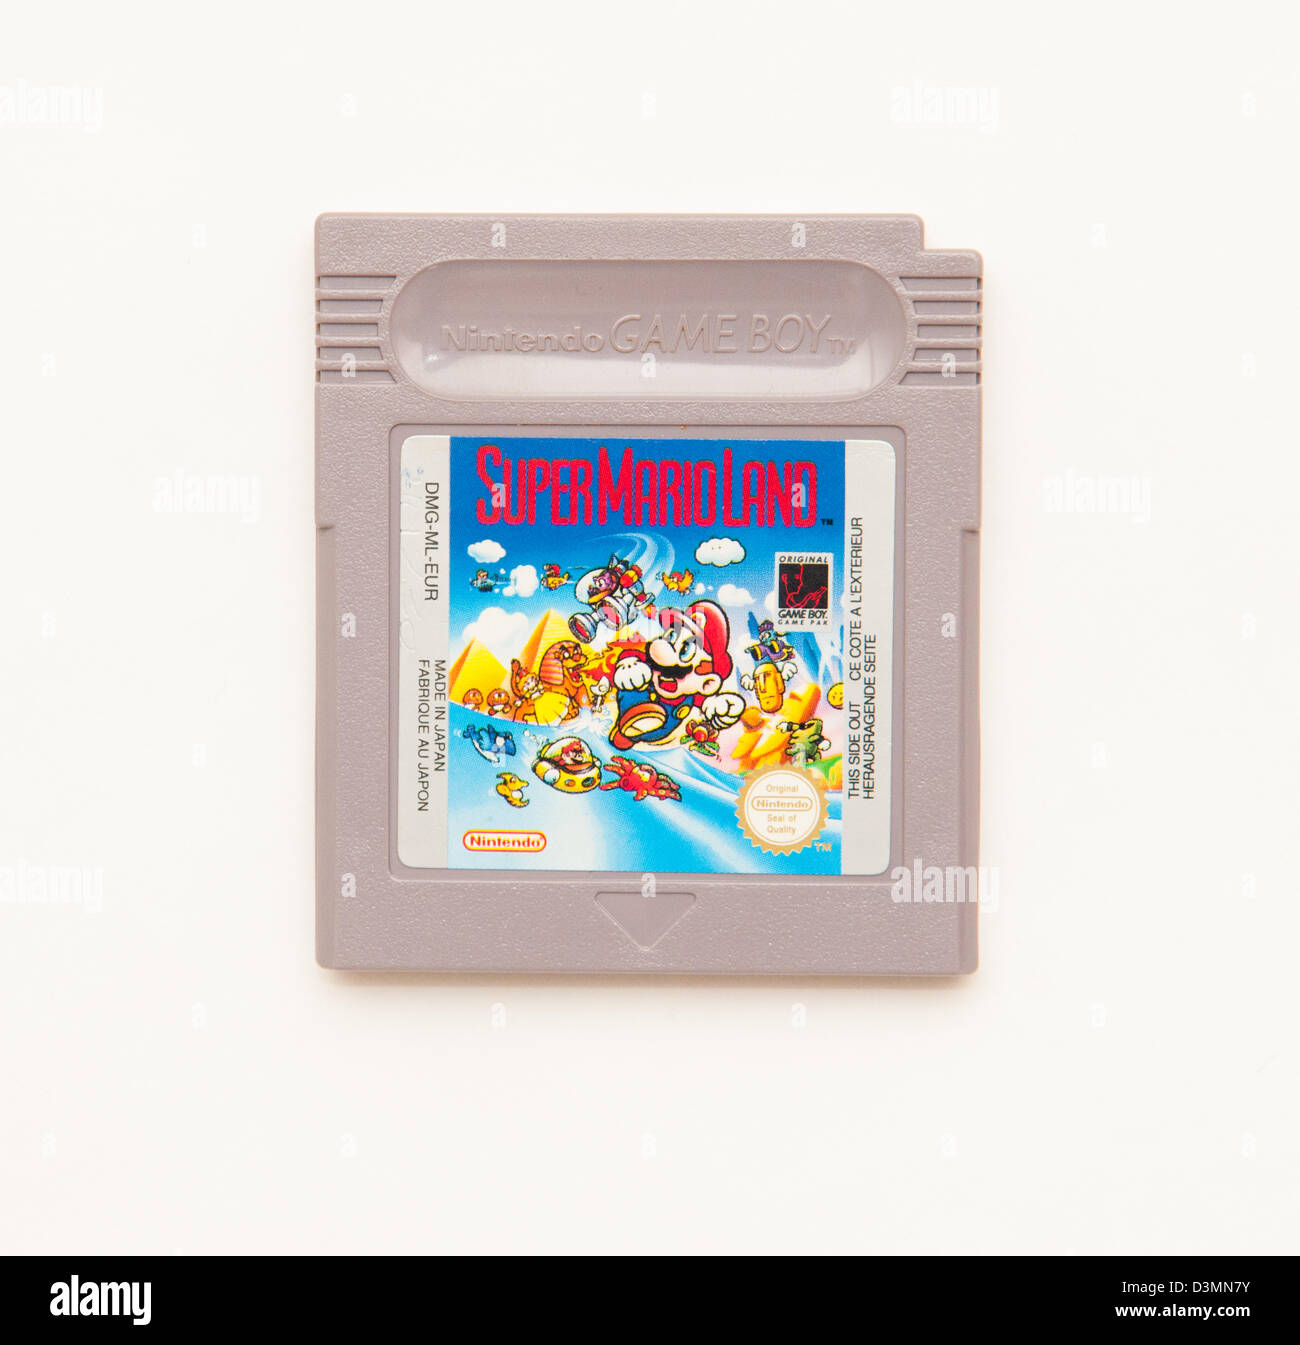 Super Mario Land Nintendo Game Boy cartridge Stock Photo - Alamy